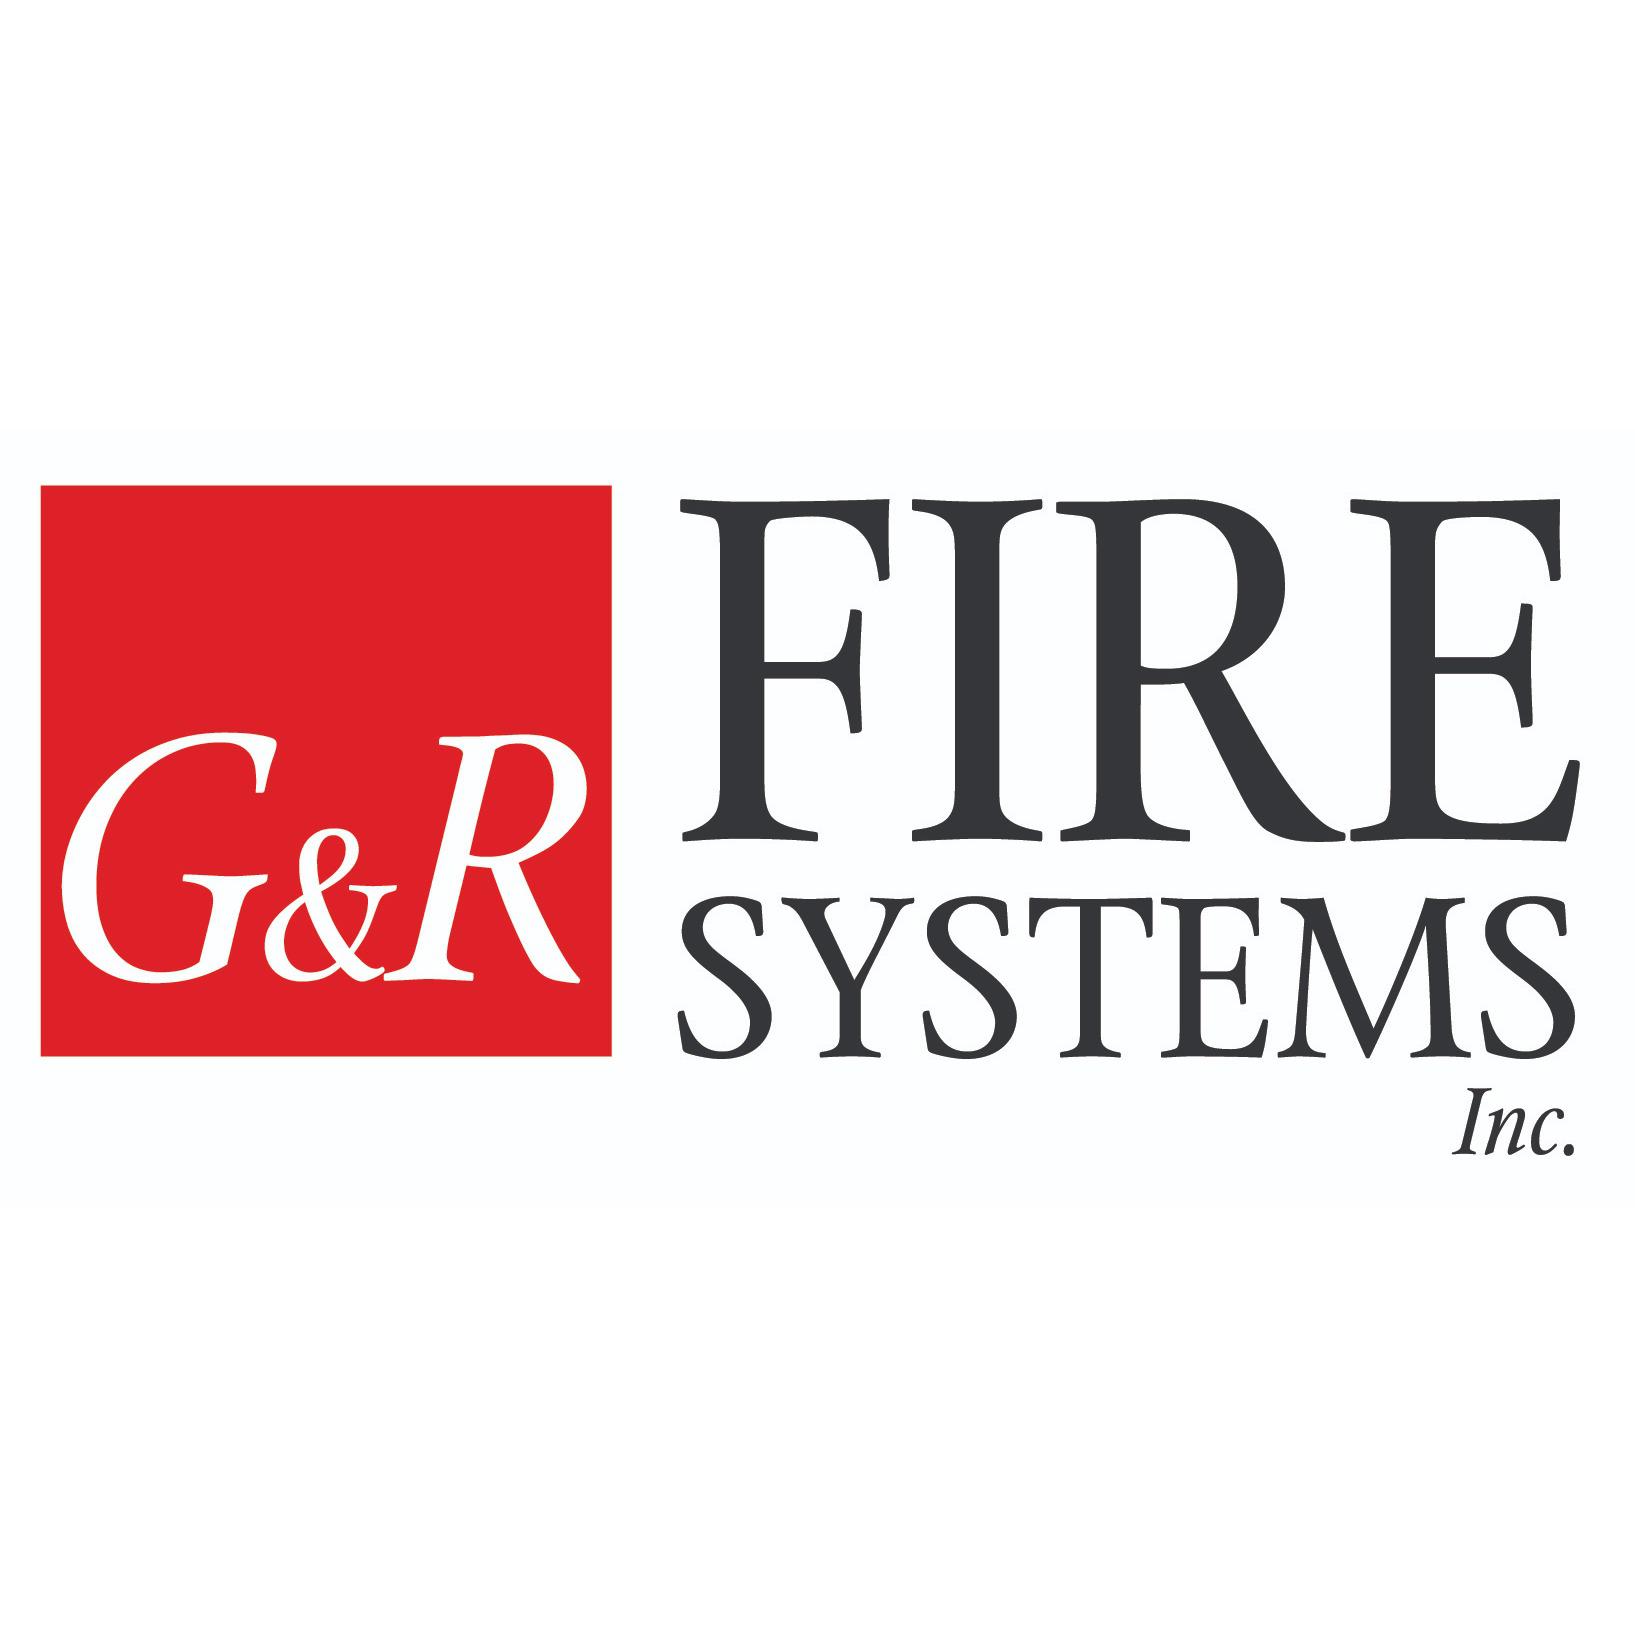 G&R Fire Systems, Inc. Logo